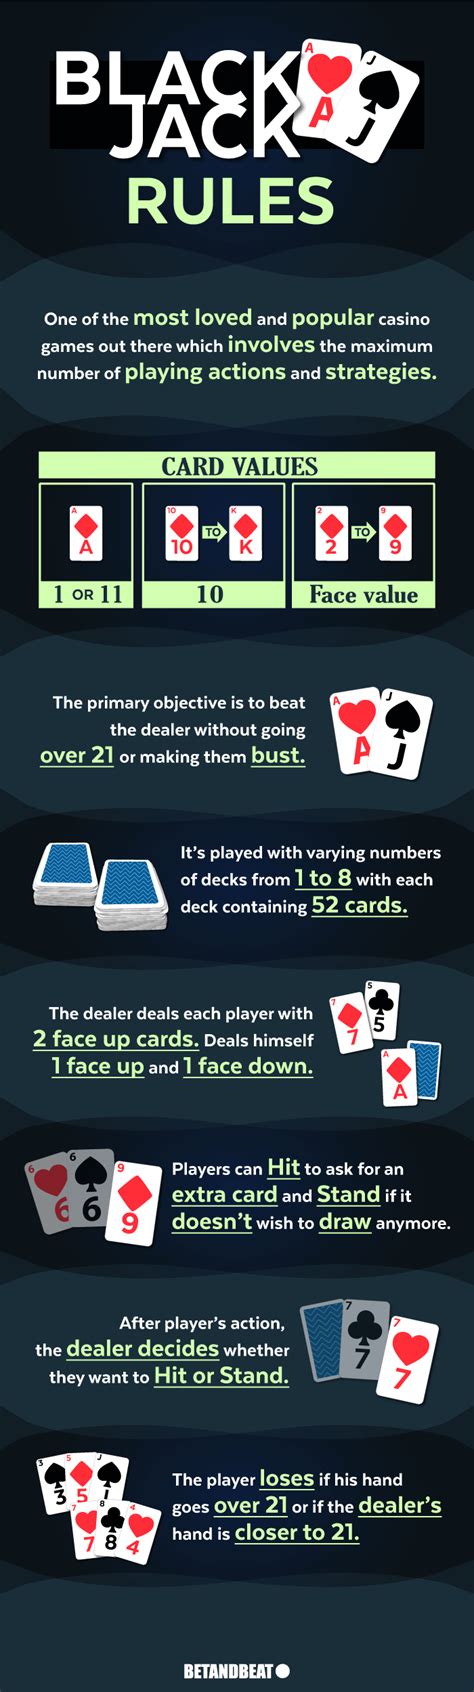 blackjack deck rules yenc